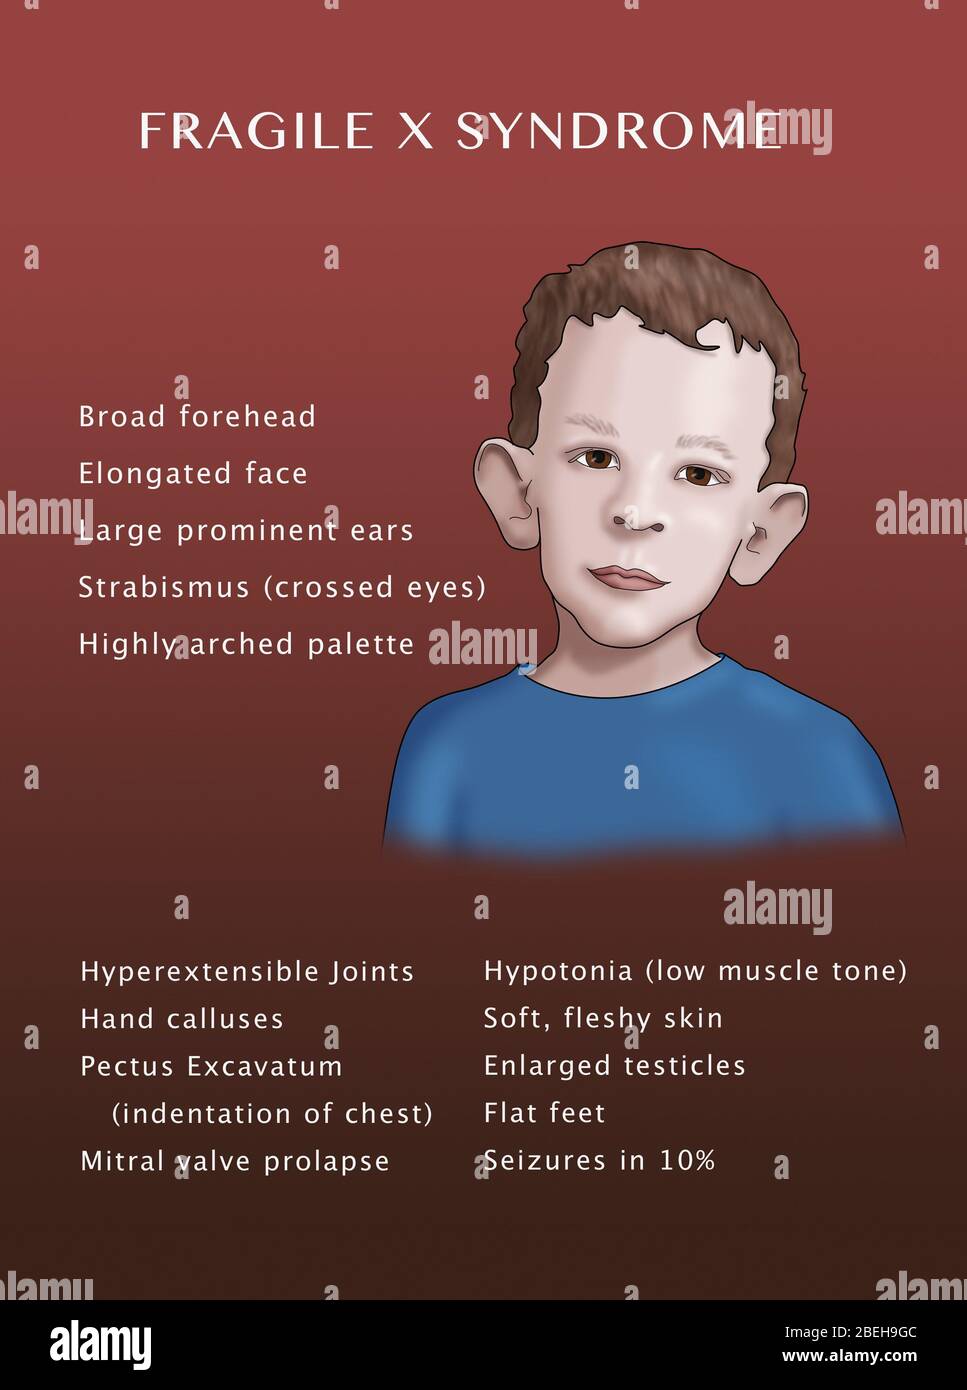 Fragile X syndrome symptoms. Illustration Stock Photo - Alamy